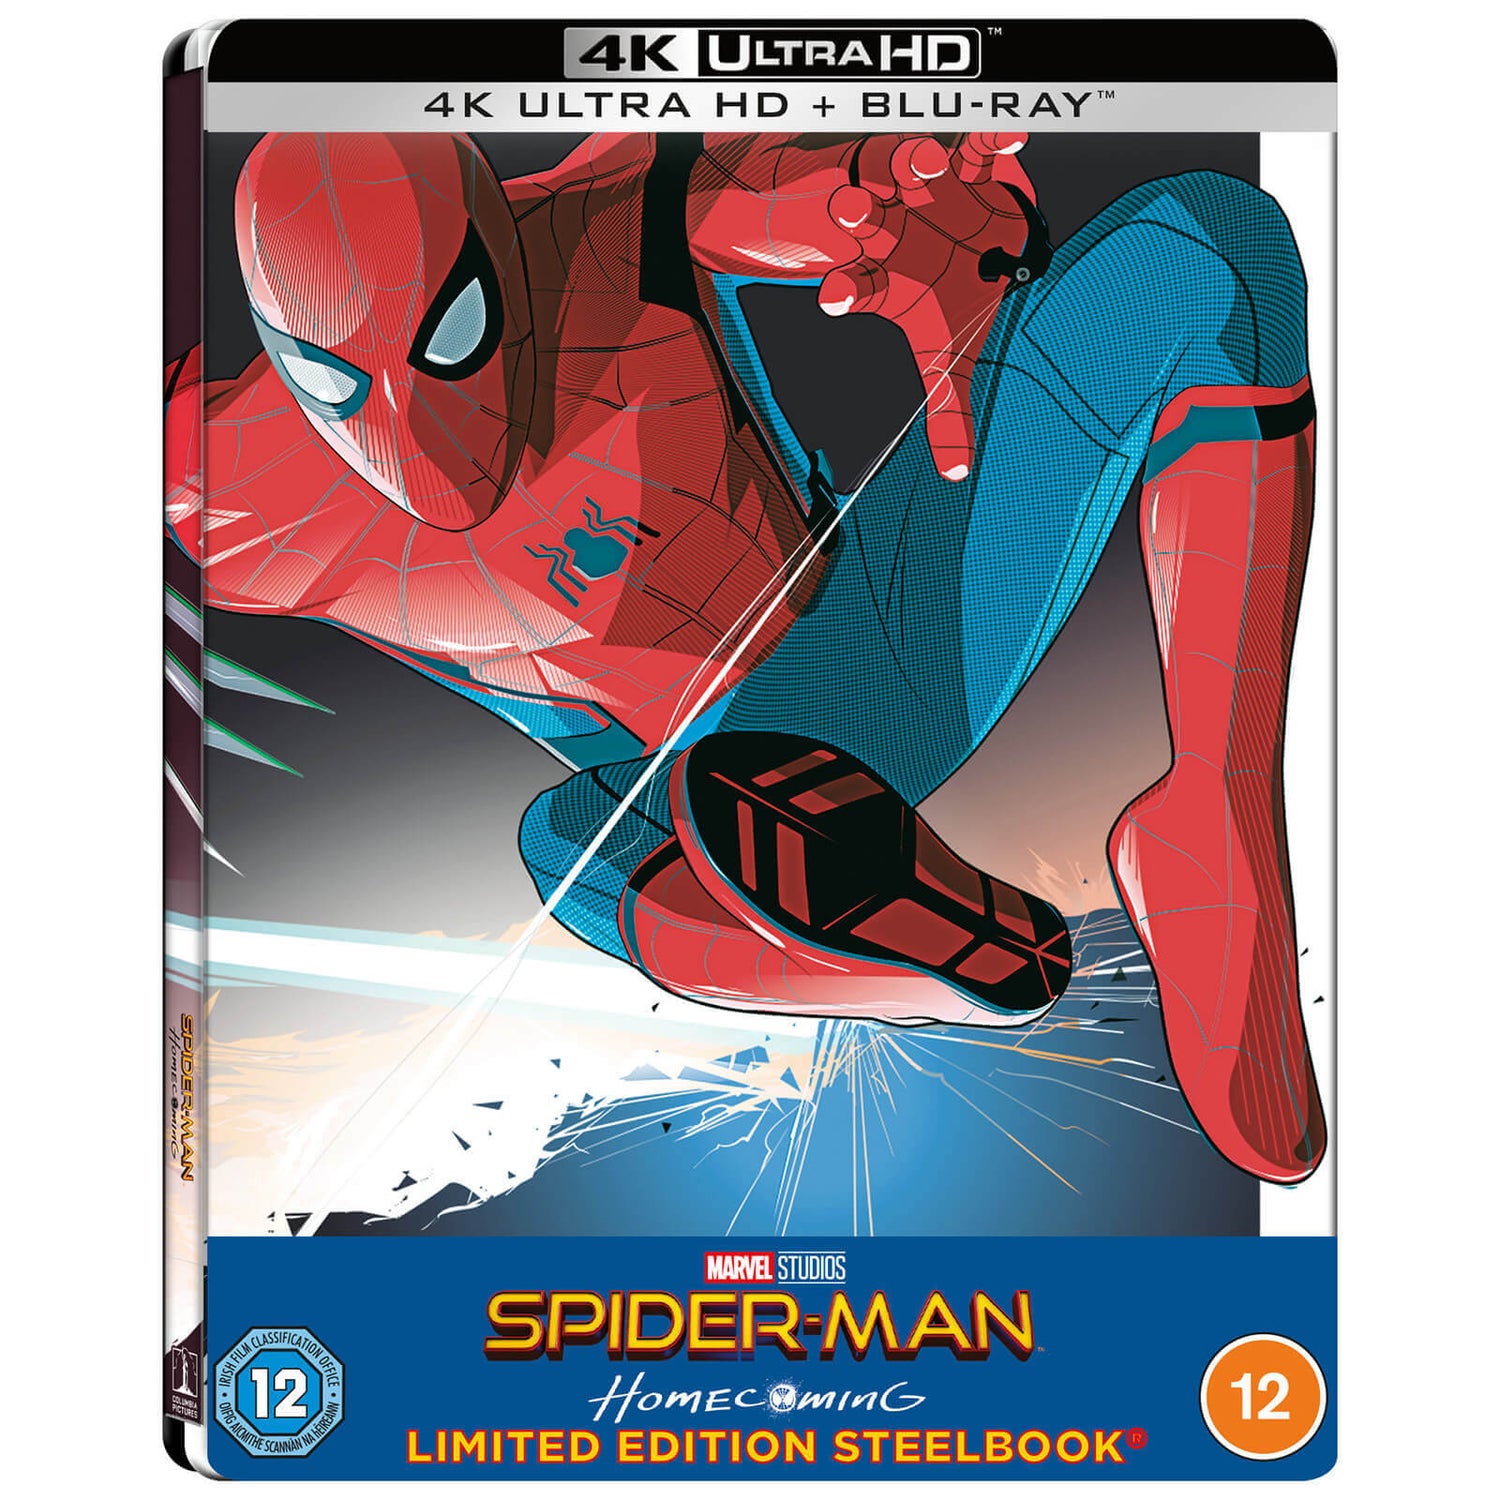 Spider-Man Homecoming/Far From Home 4k Steelbooks micasamarketing.com.pk